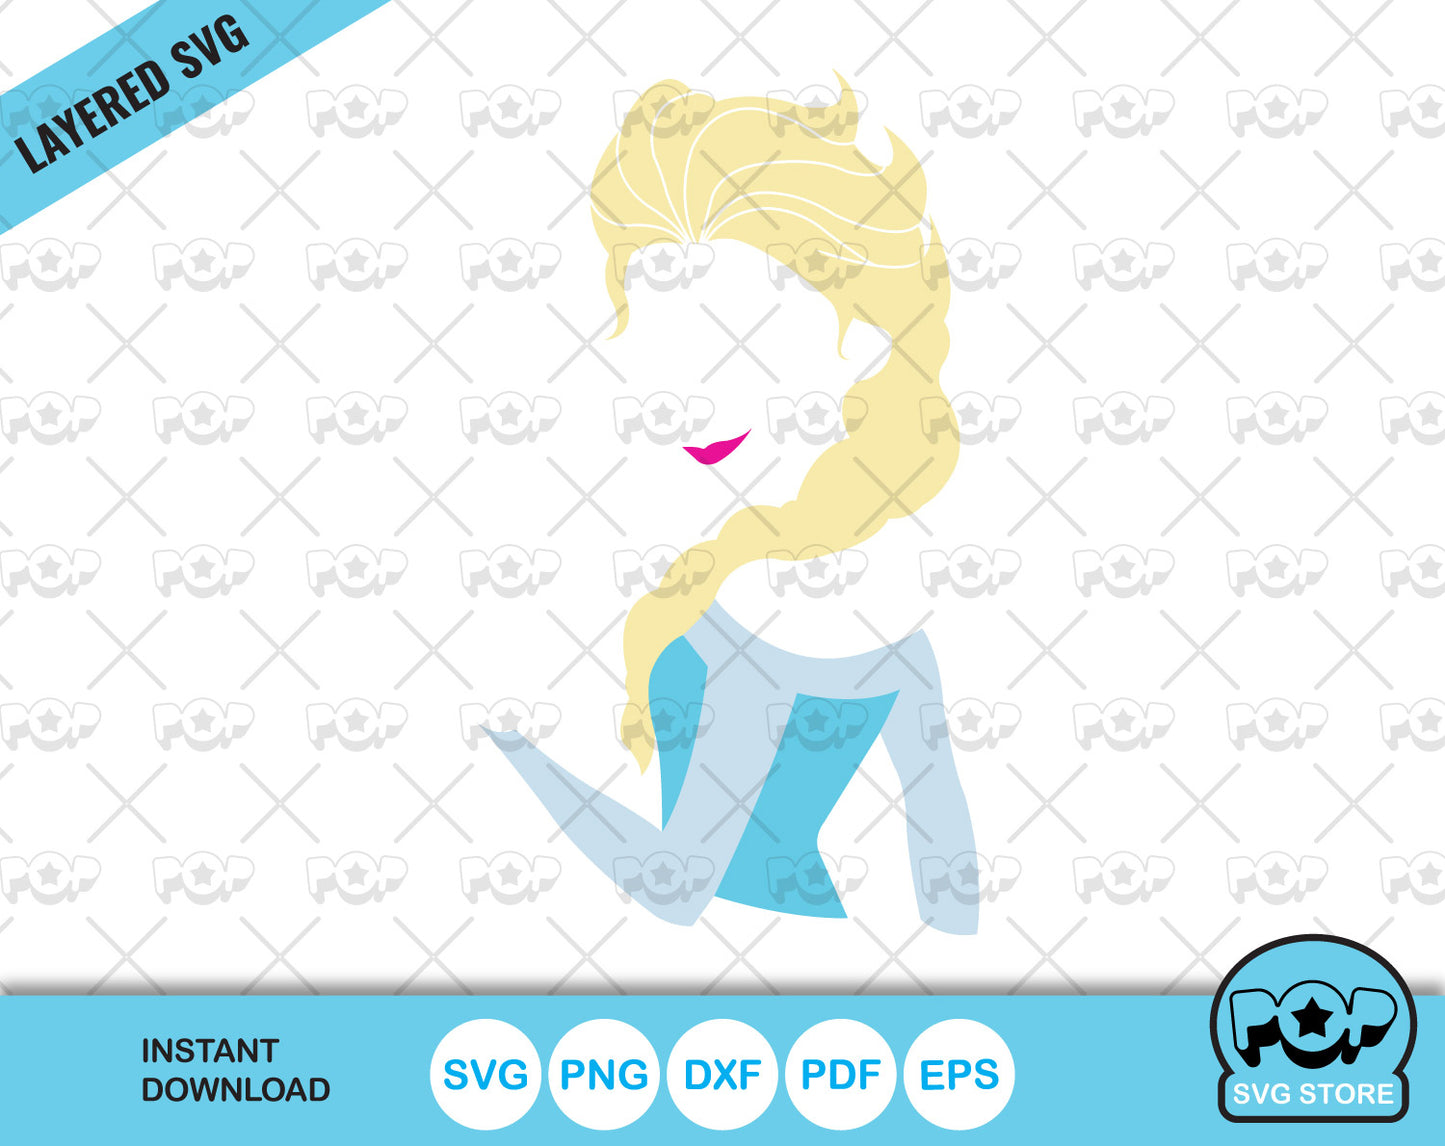 Princess Elsa clipart, Frozen SVG cutting files for cricut silhouette, SVG, PNG, DXF, instant download